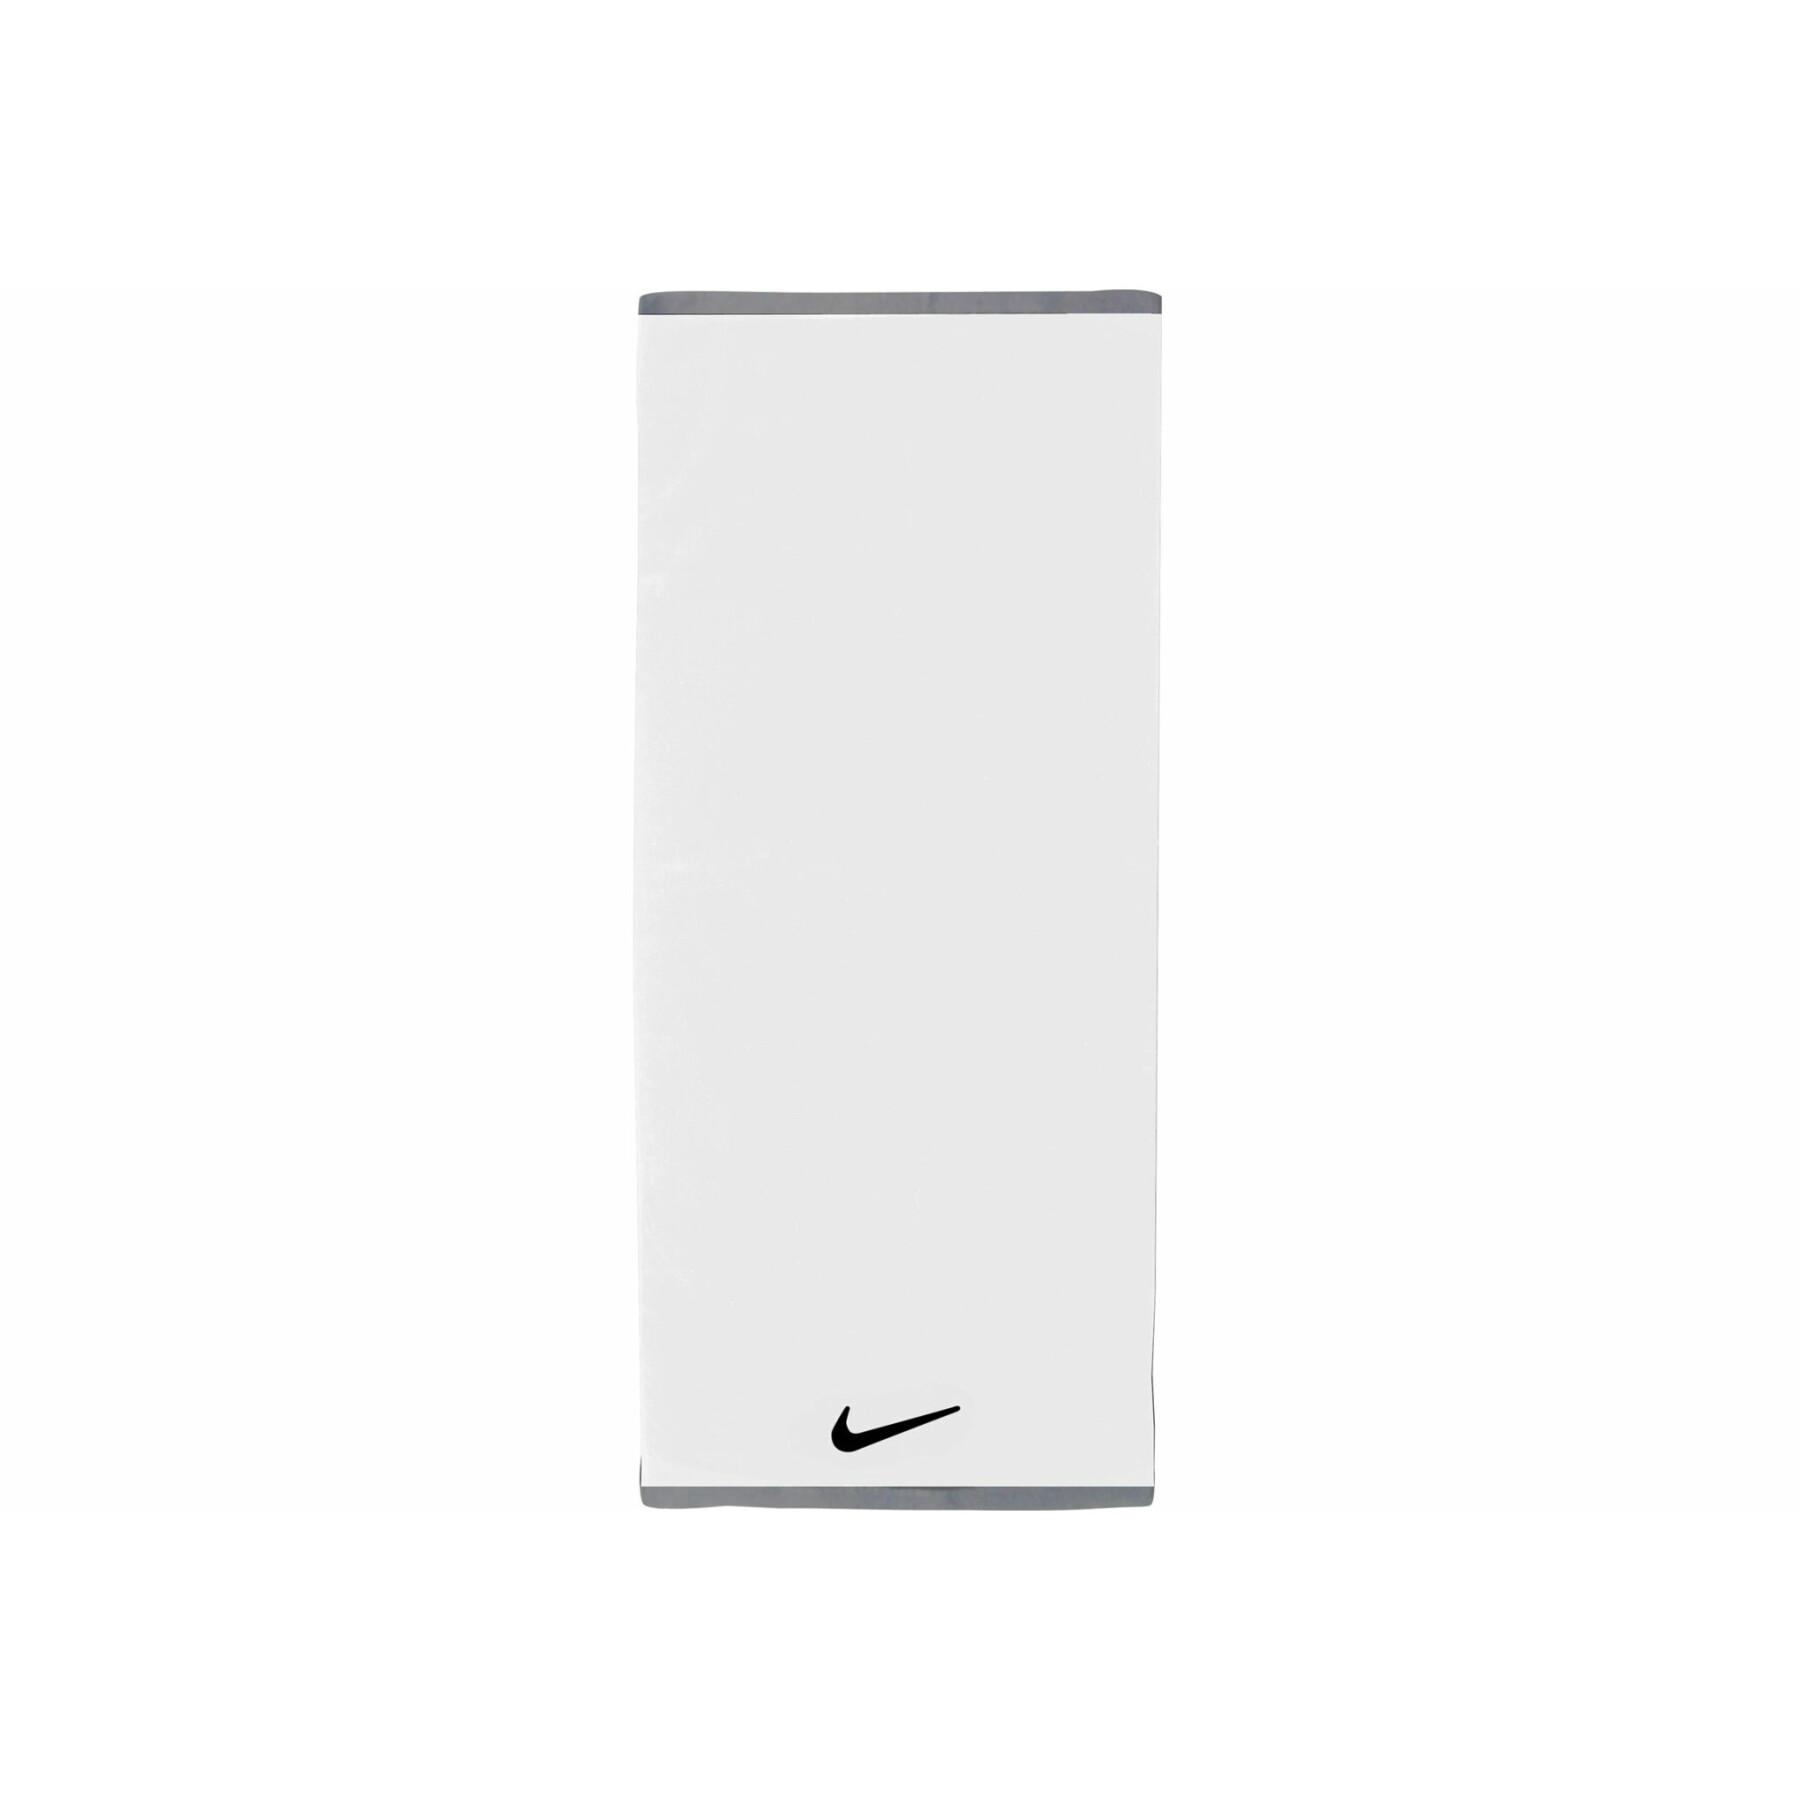 Handduk Nike fundamental L